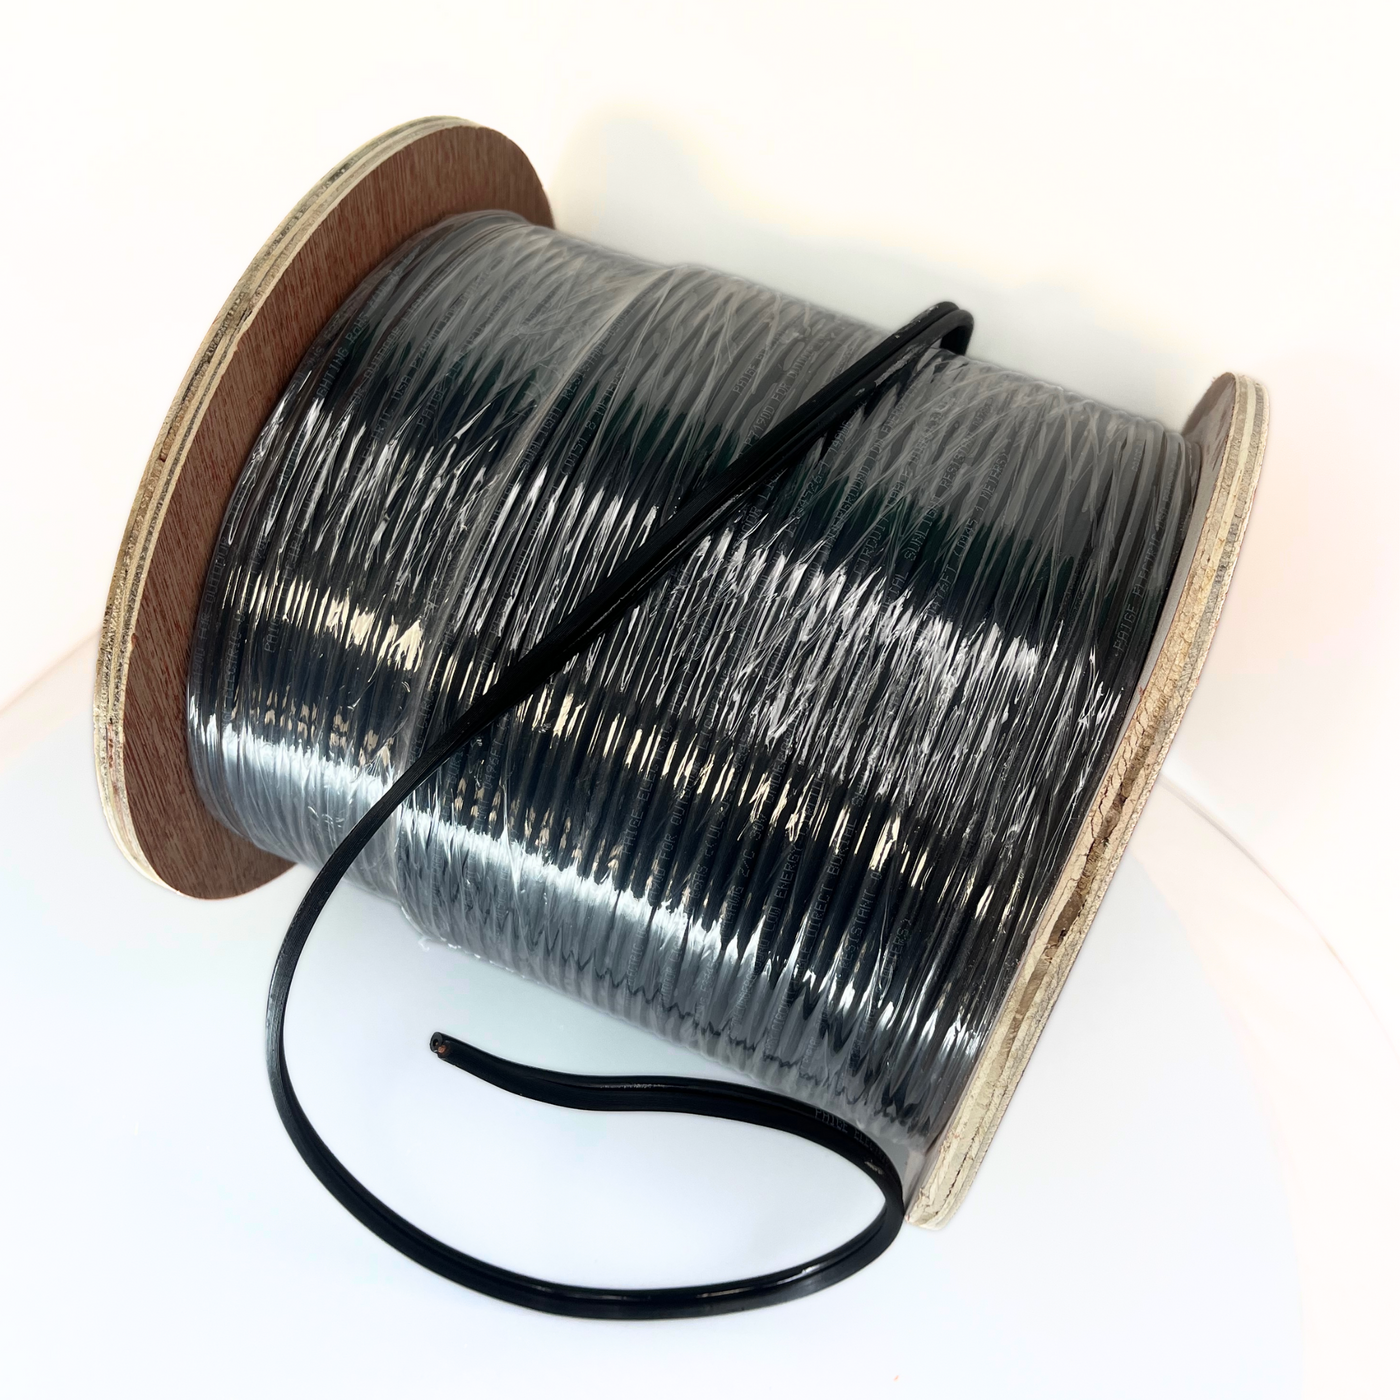 14 Gauge 2-Conductor Speaker Cable Length:JA-14-2-500 Color:Black